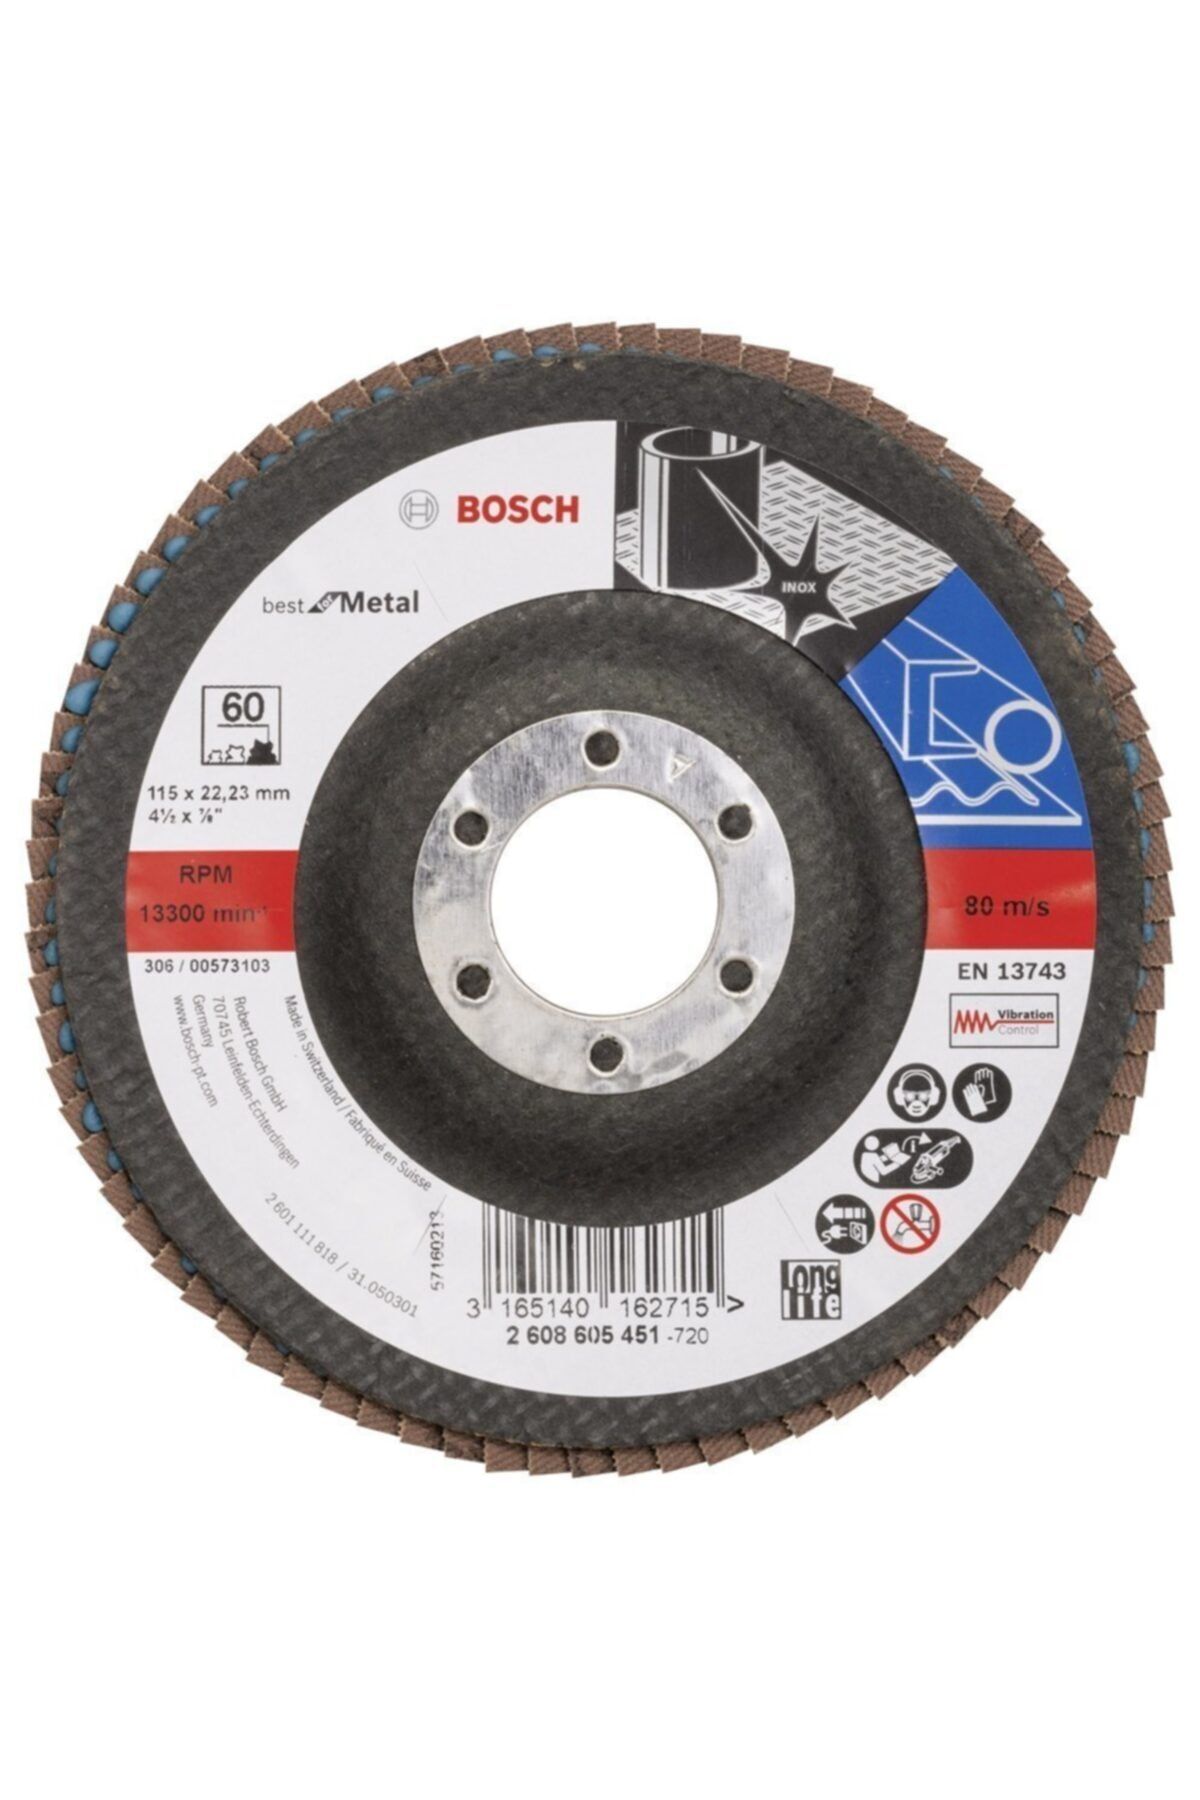 Bosch Best For Metal Flap Disk 115 mm 60 K